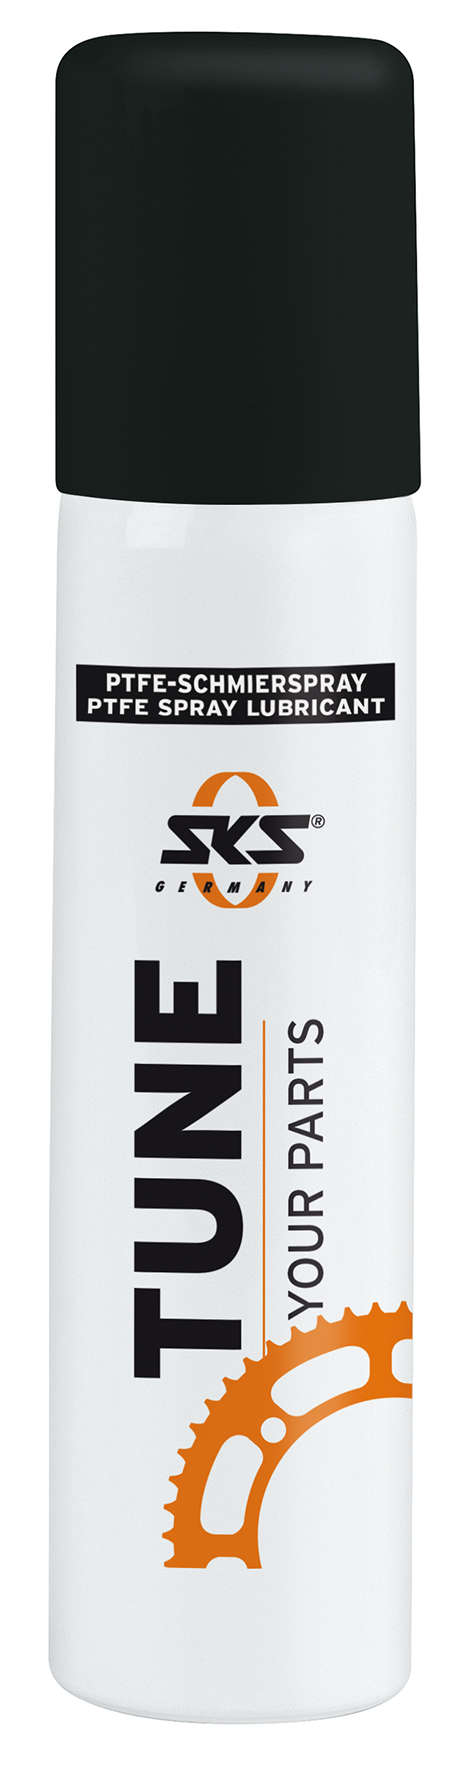 SKS Tune Your Parts PTFE Spray